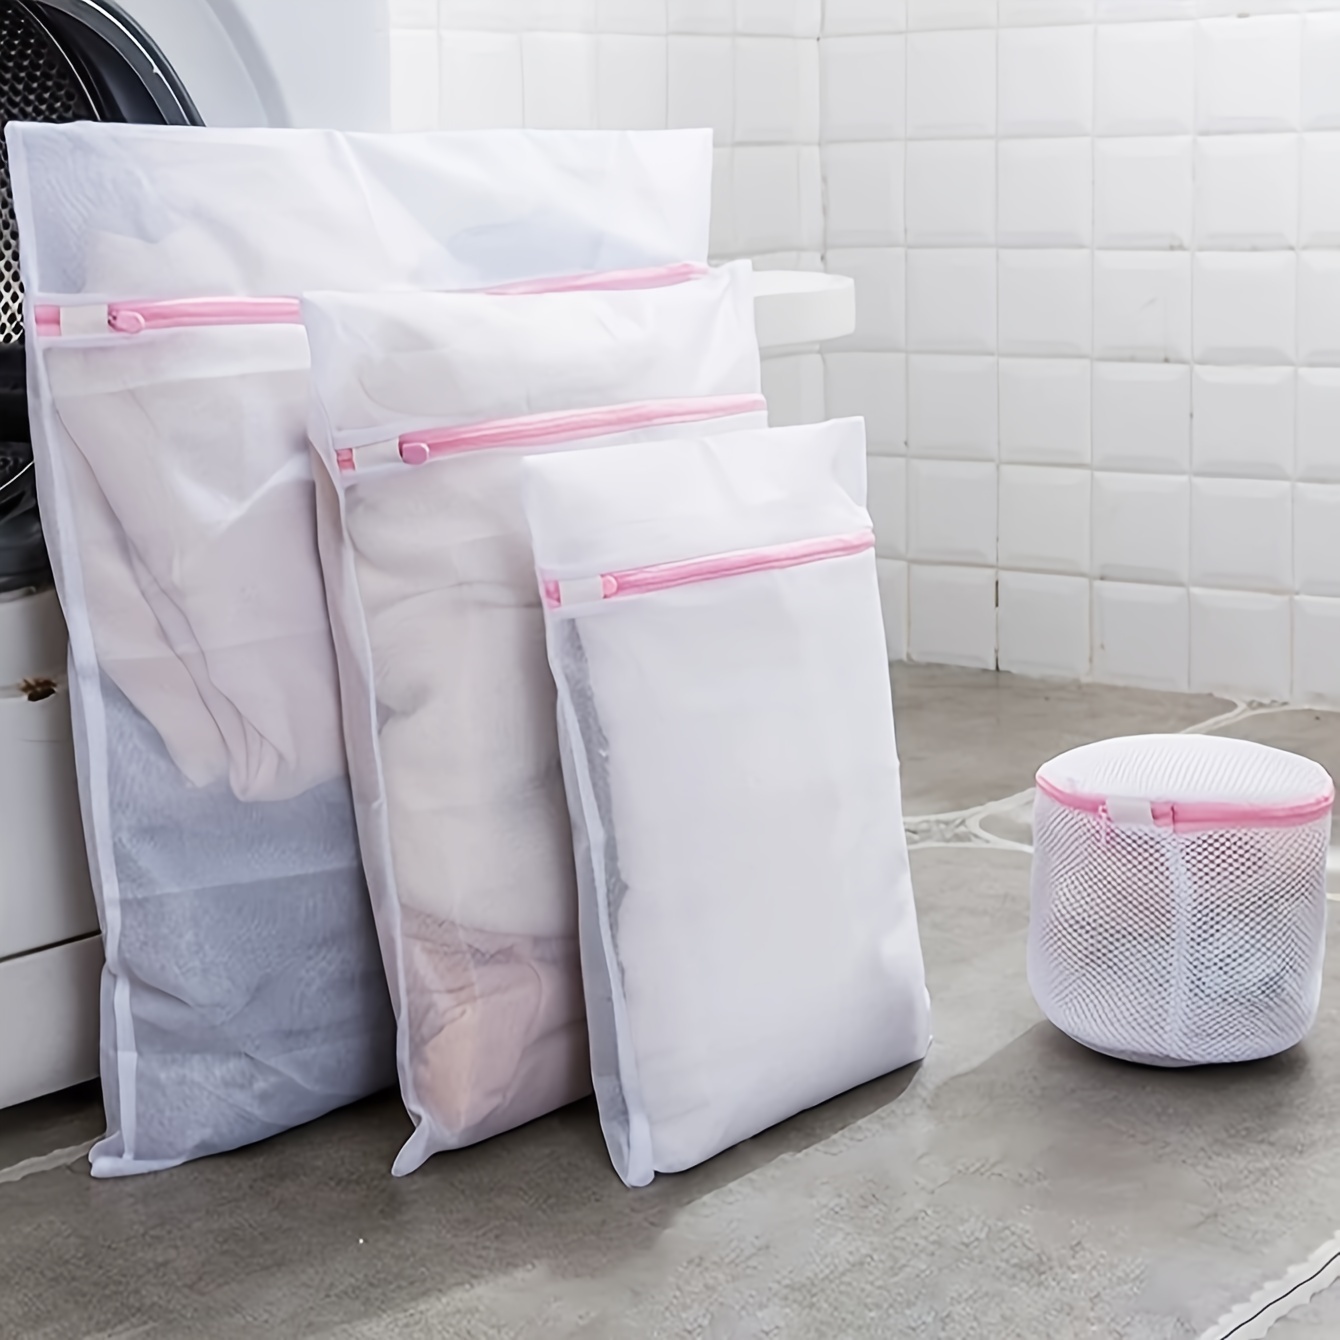 Washing Machine Mesh Net Bags Large Bra Laundry Wash Bags Reusable